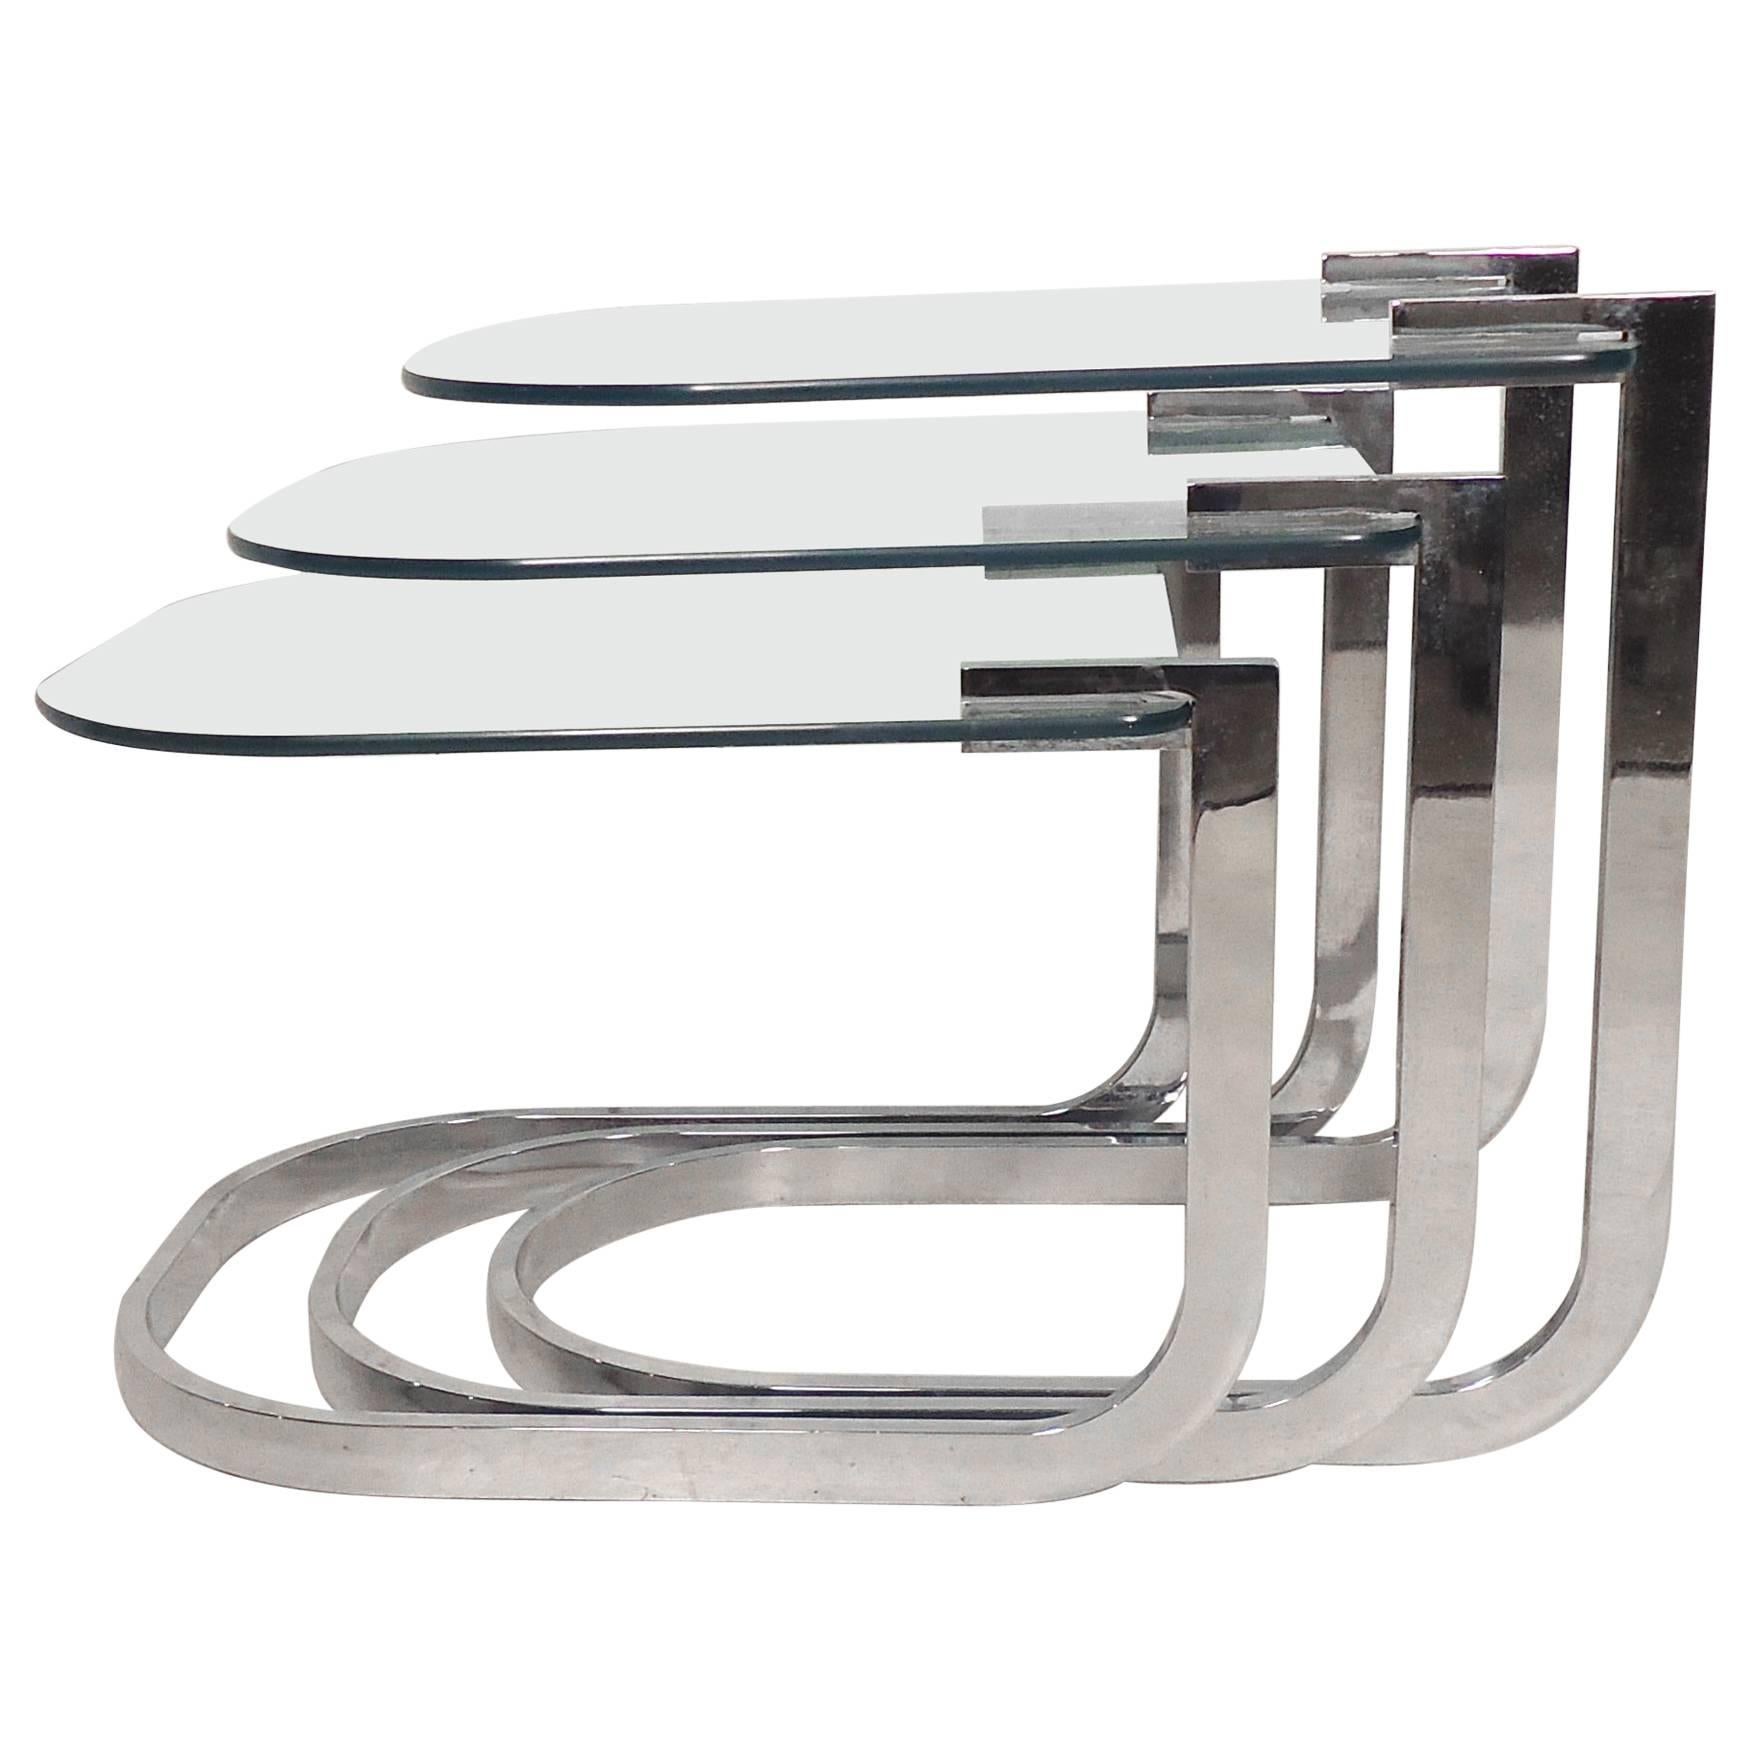 Design Institute of America 'Dia' Chrome and Glass Tables